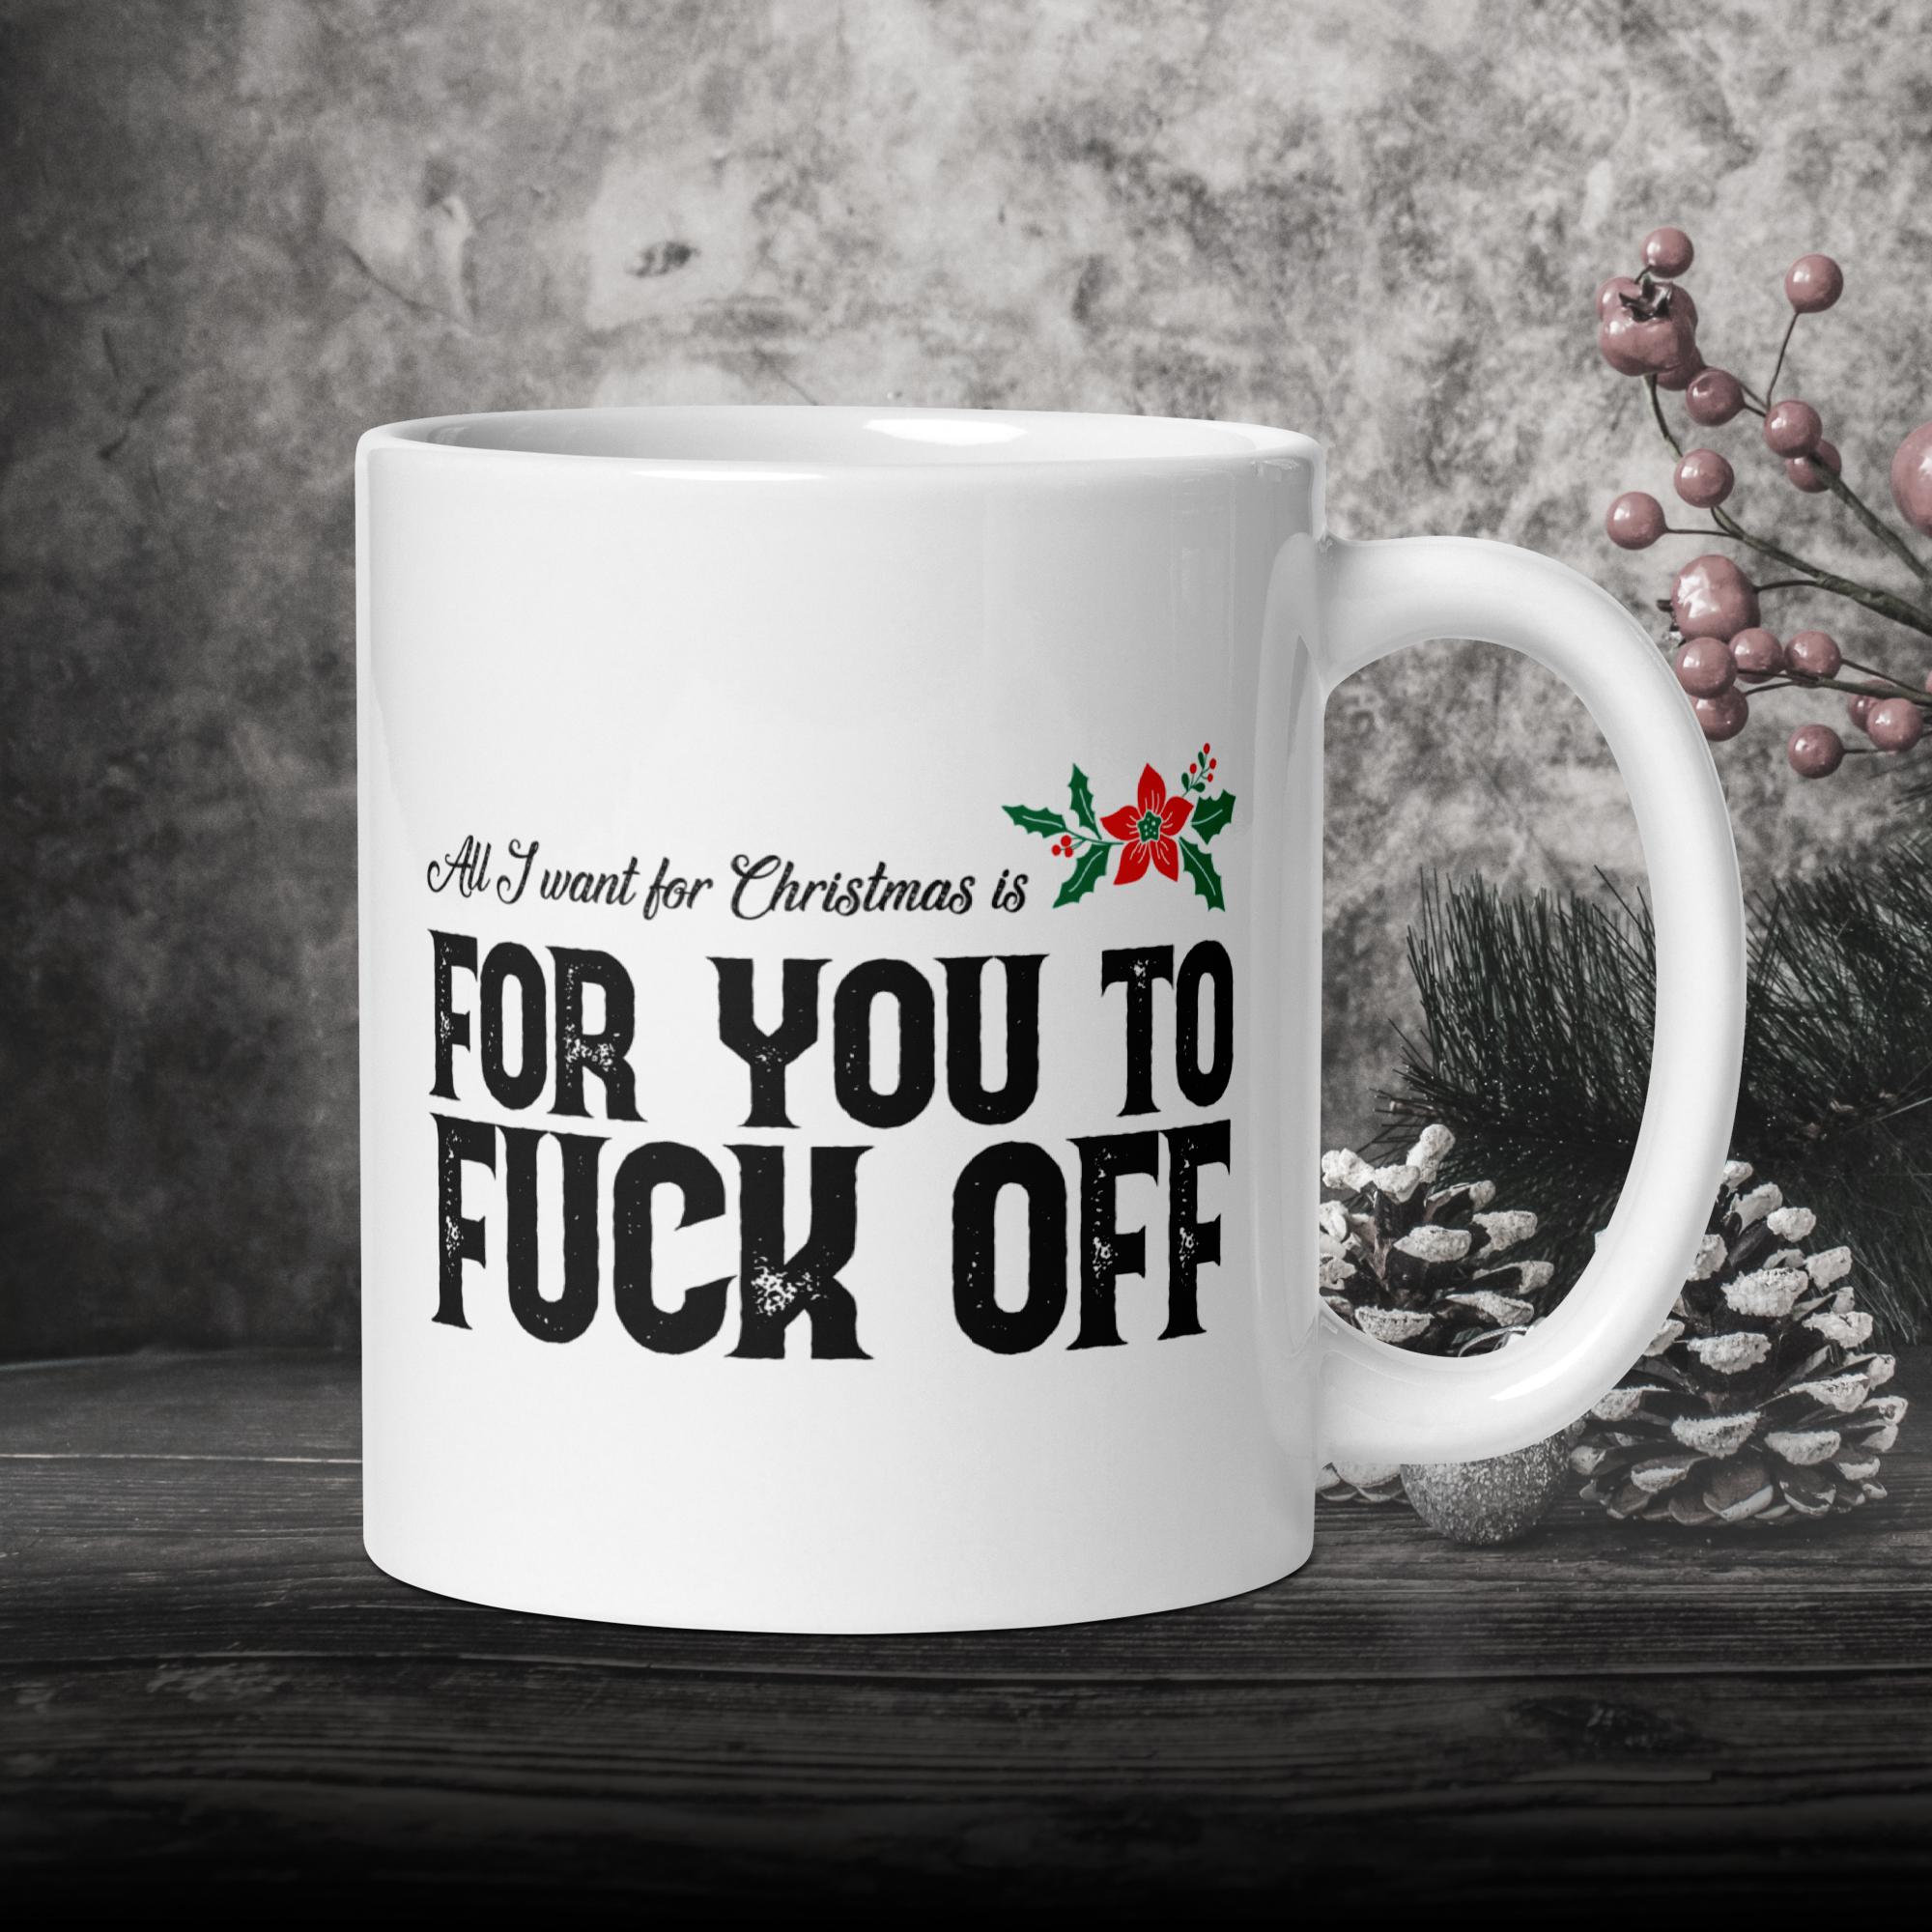 Fucking Fuck Fuck Fuckety Fuck- Original Coffee Mug for Sale by  llllStripellll